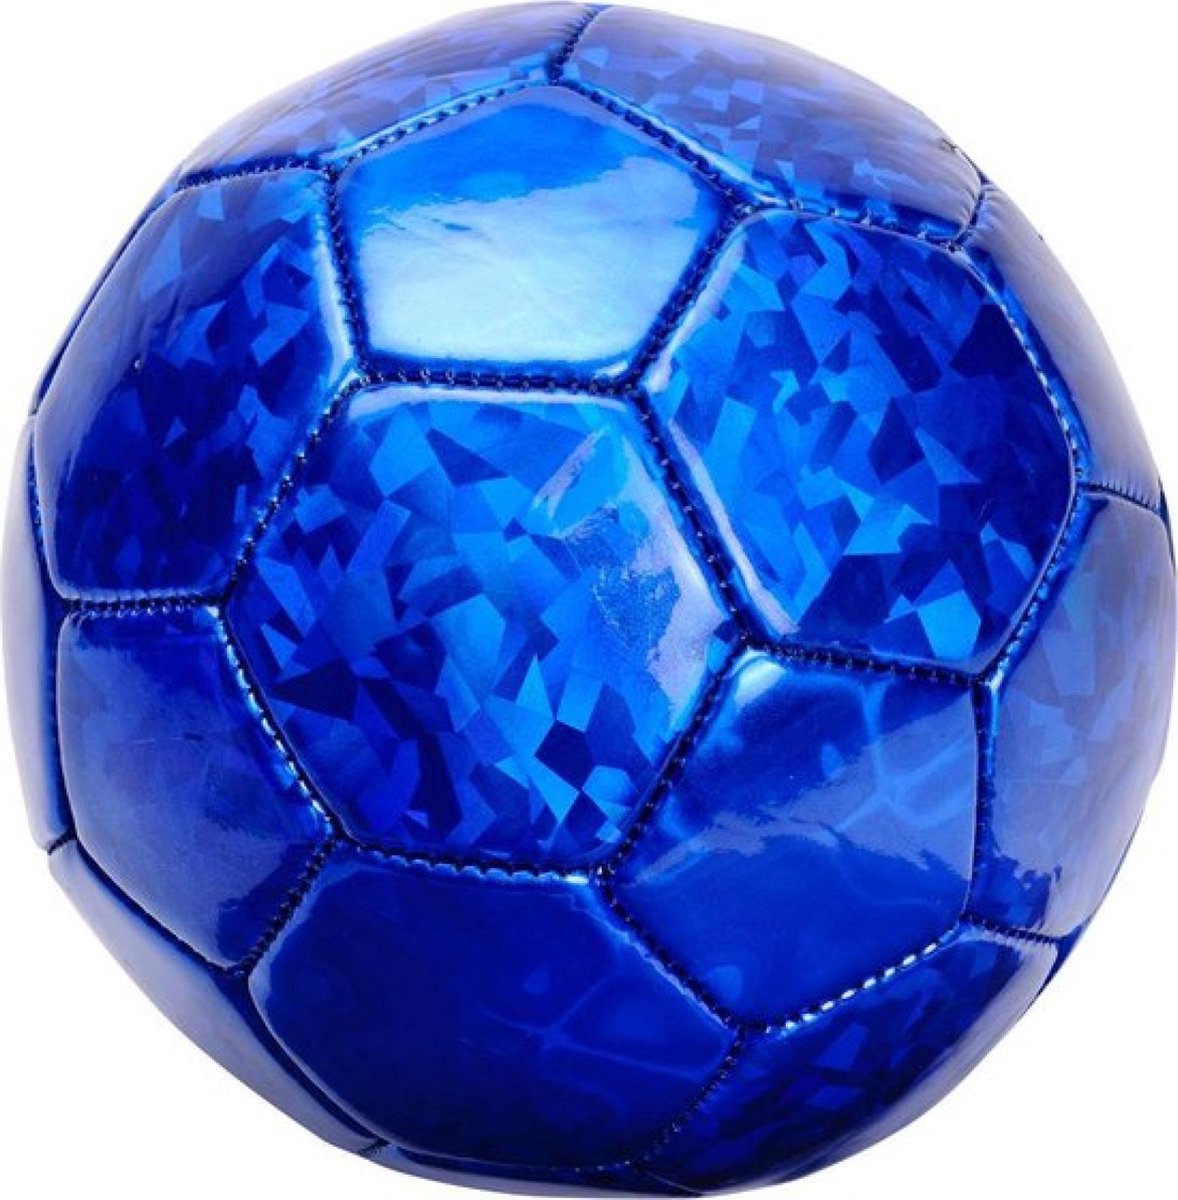 Bal - Voetbal - Blauw - Metallic - Klein - 14cm